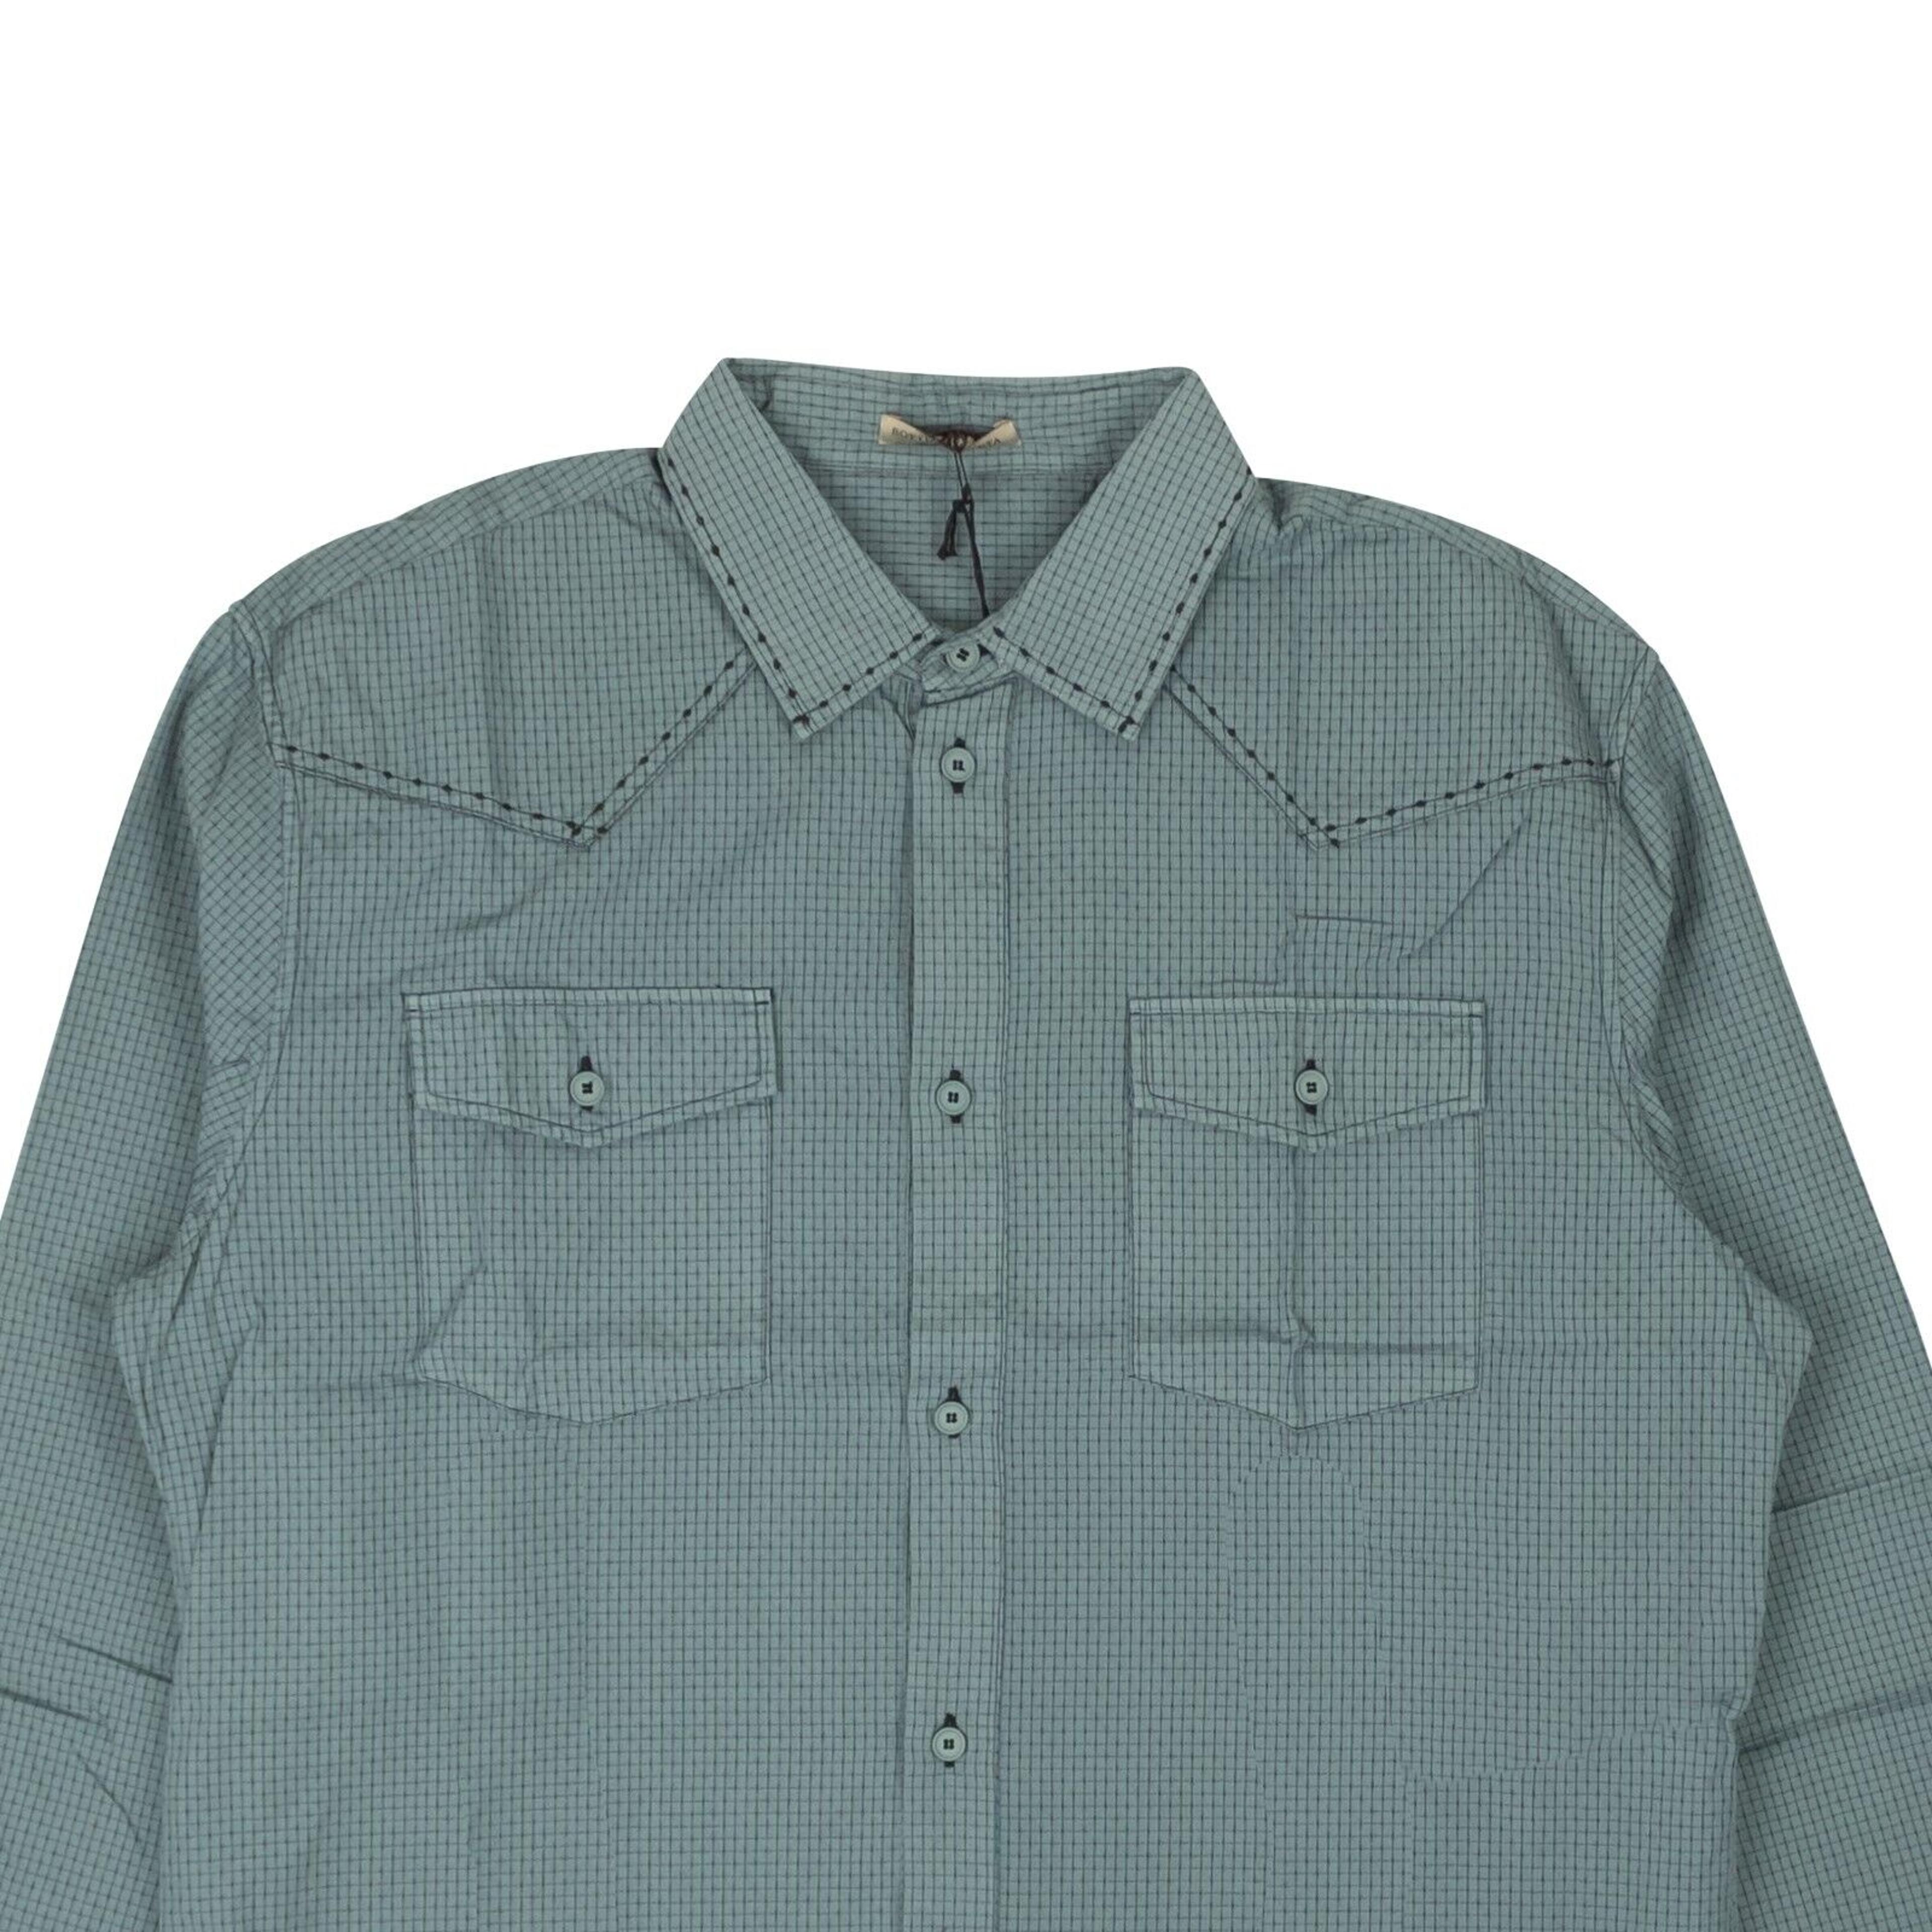 Alternate View 1 of Tweedia Blue Overdyed Cotton Textured Shirt